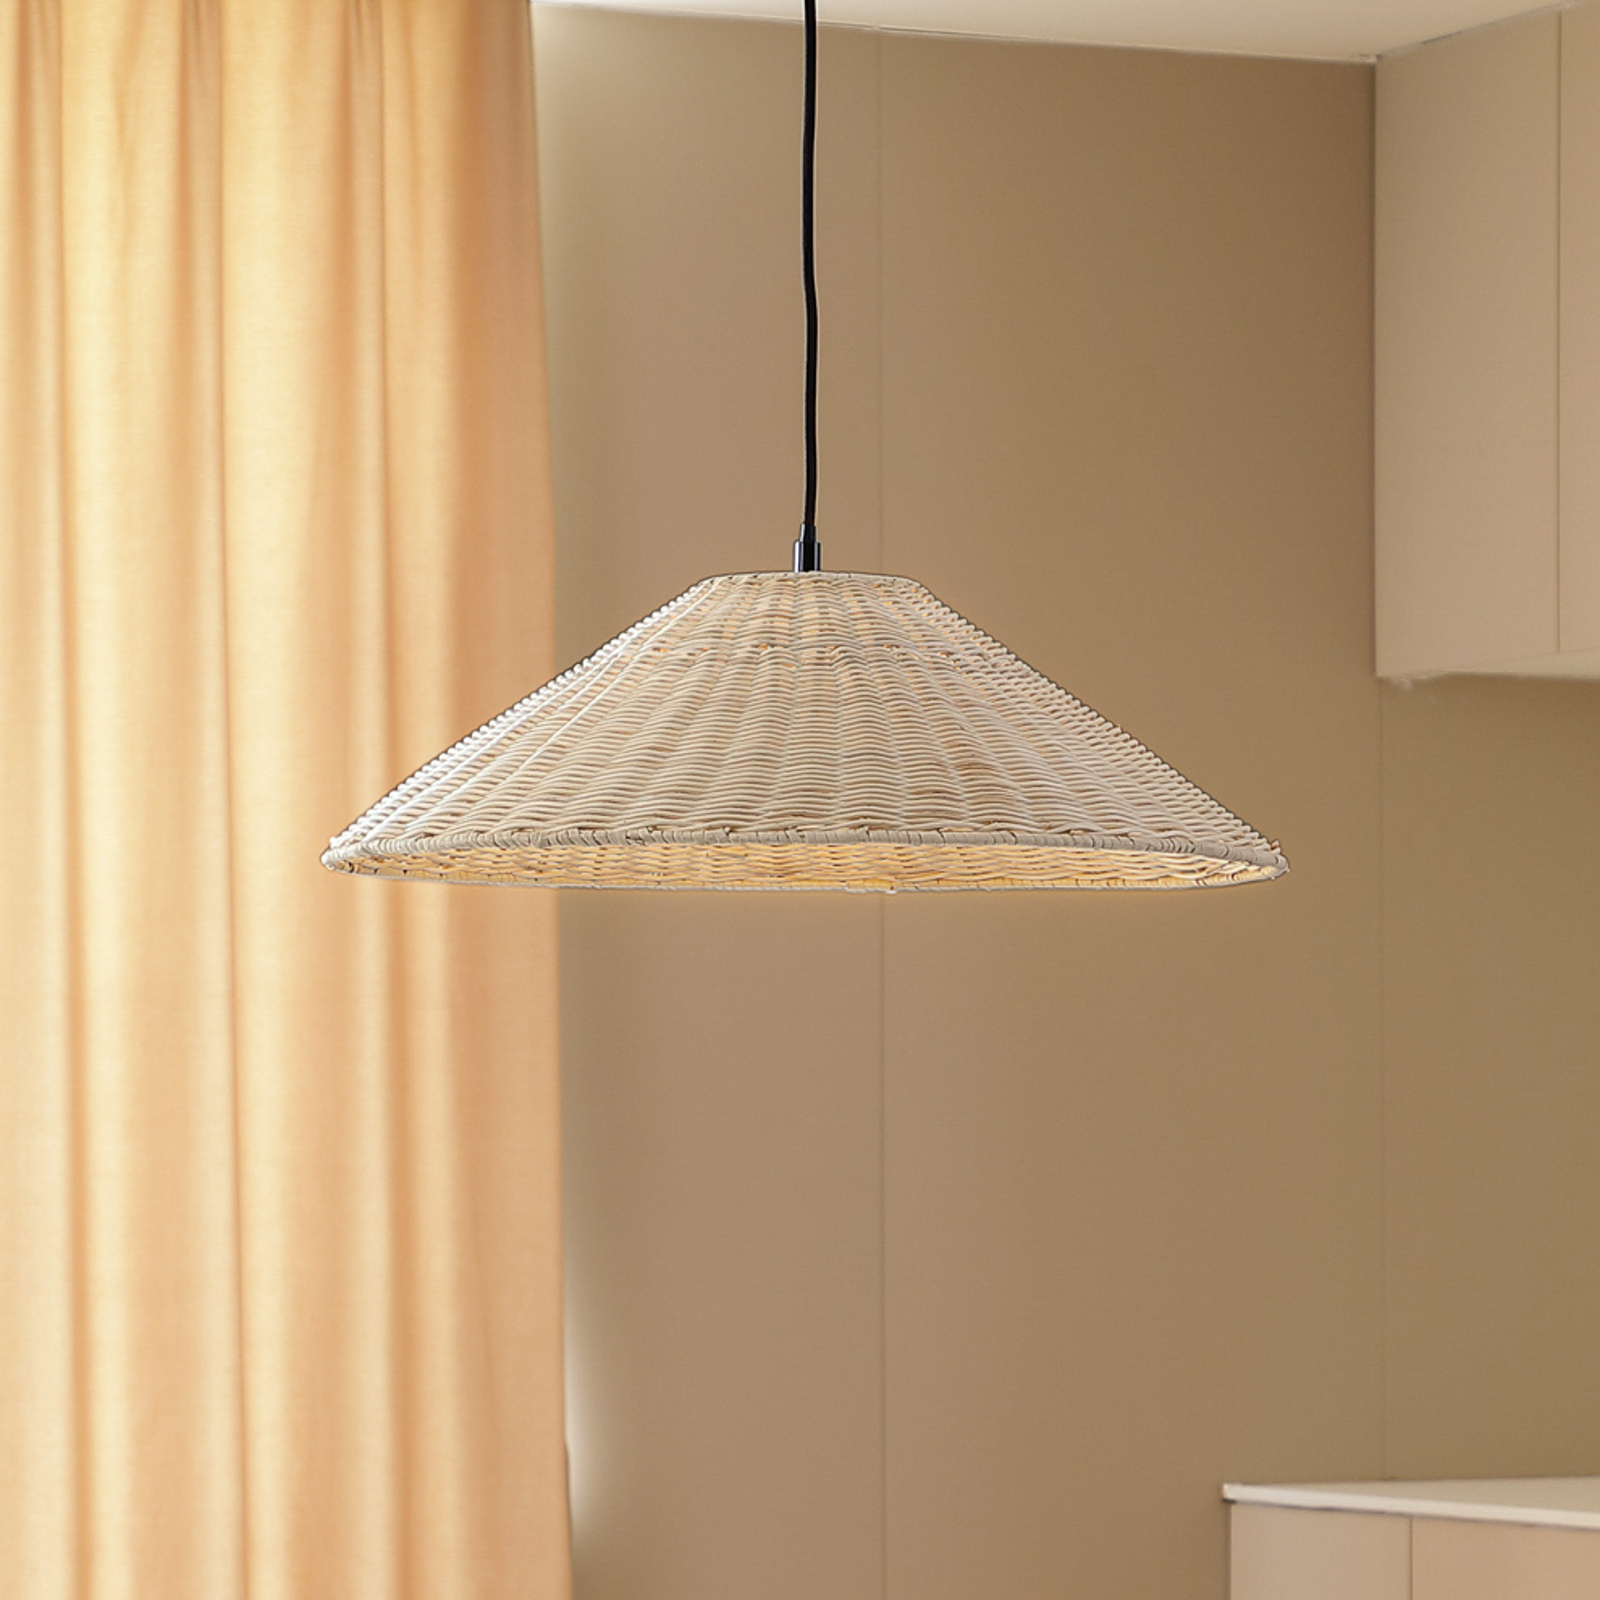 Lindby hanglamp Zyralia, houtkleurig, rotan, Ø 50 cm